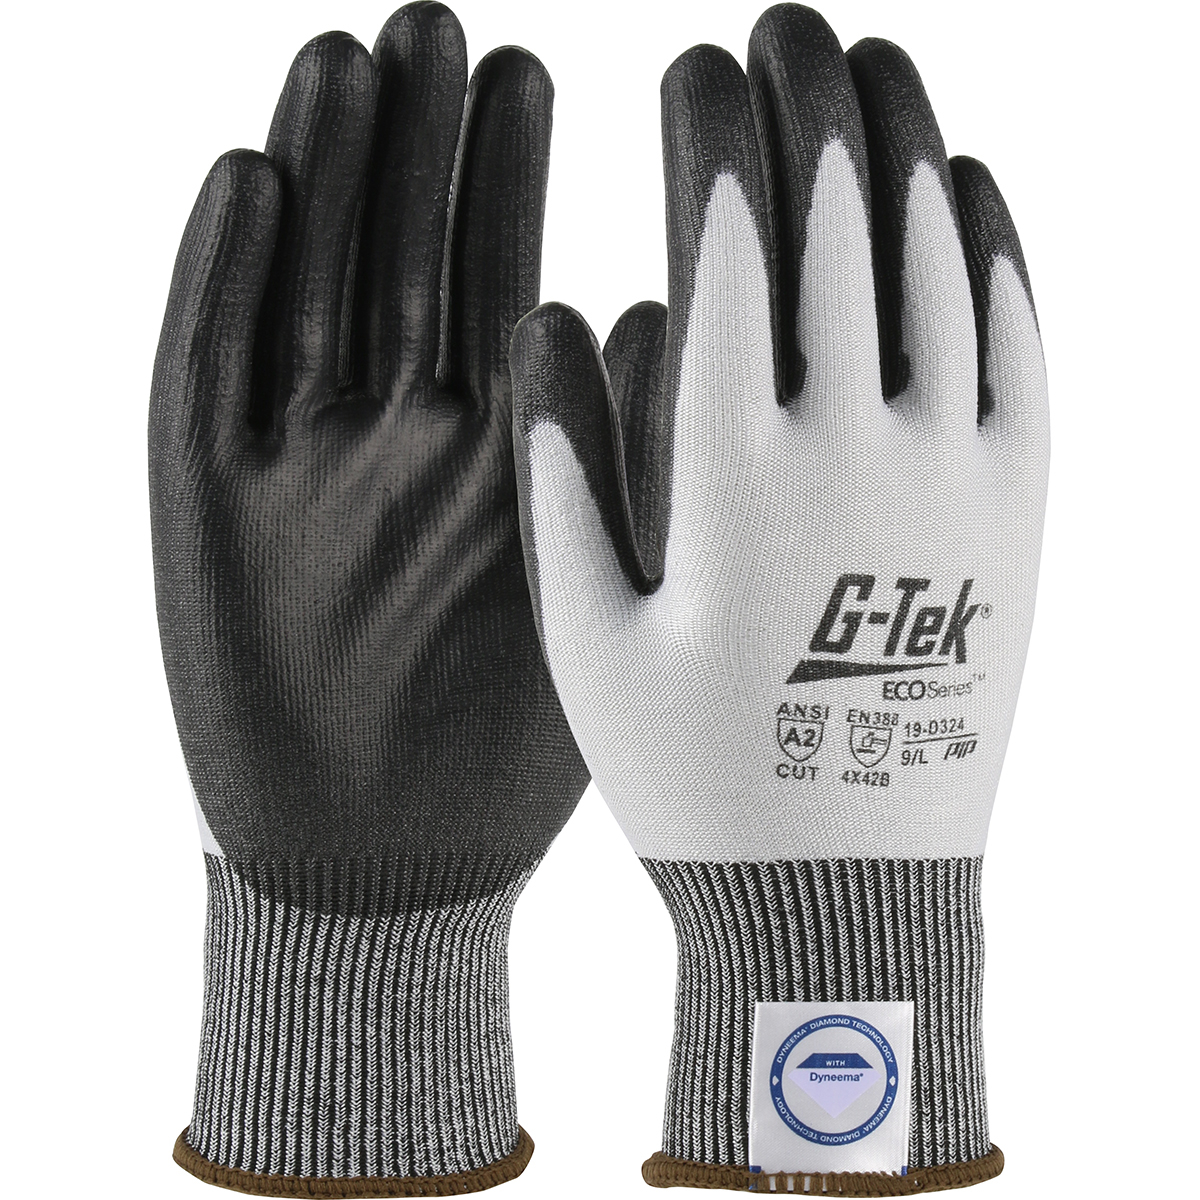 19-D324 PIP®G-Tek®ECO系列™无缝针织Dyneema®凤凰混合手套，手掌和手指上涂有聚氨酯平握把